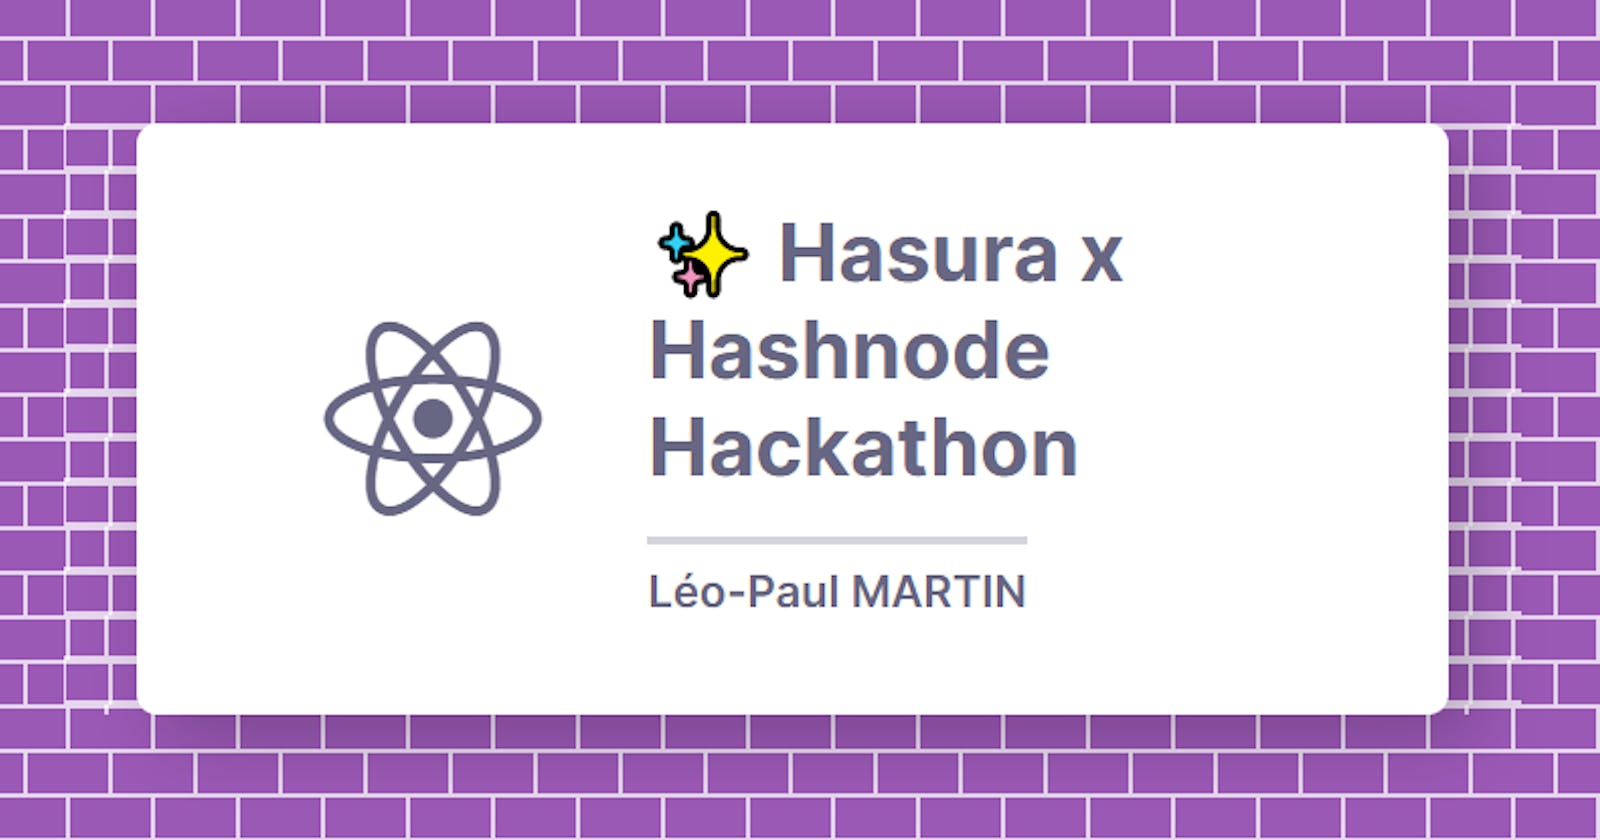 ✨ Hasura x Hashnode Hackathon